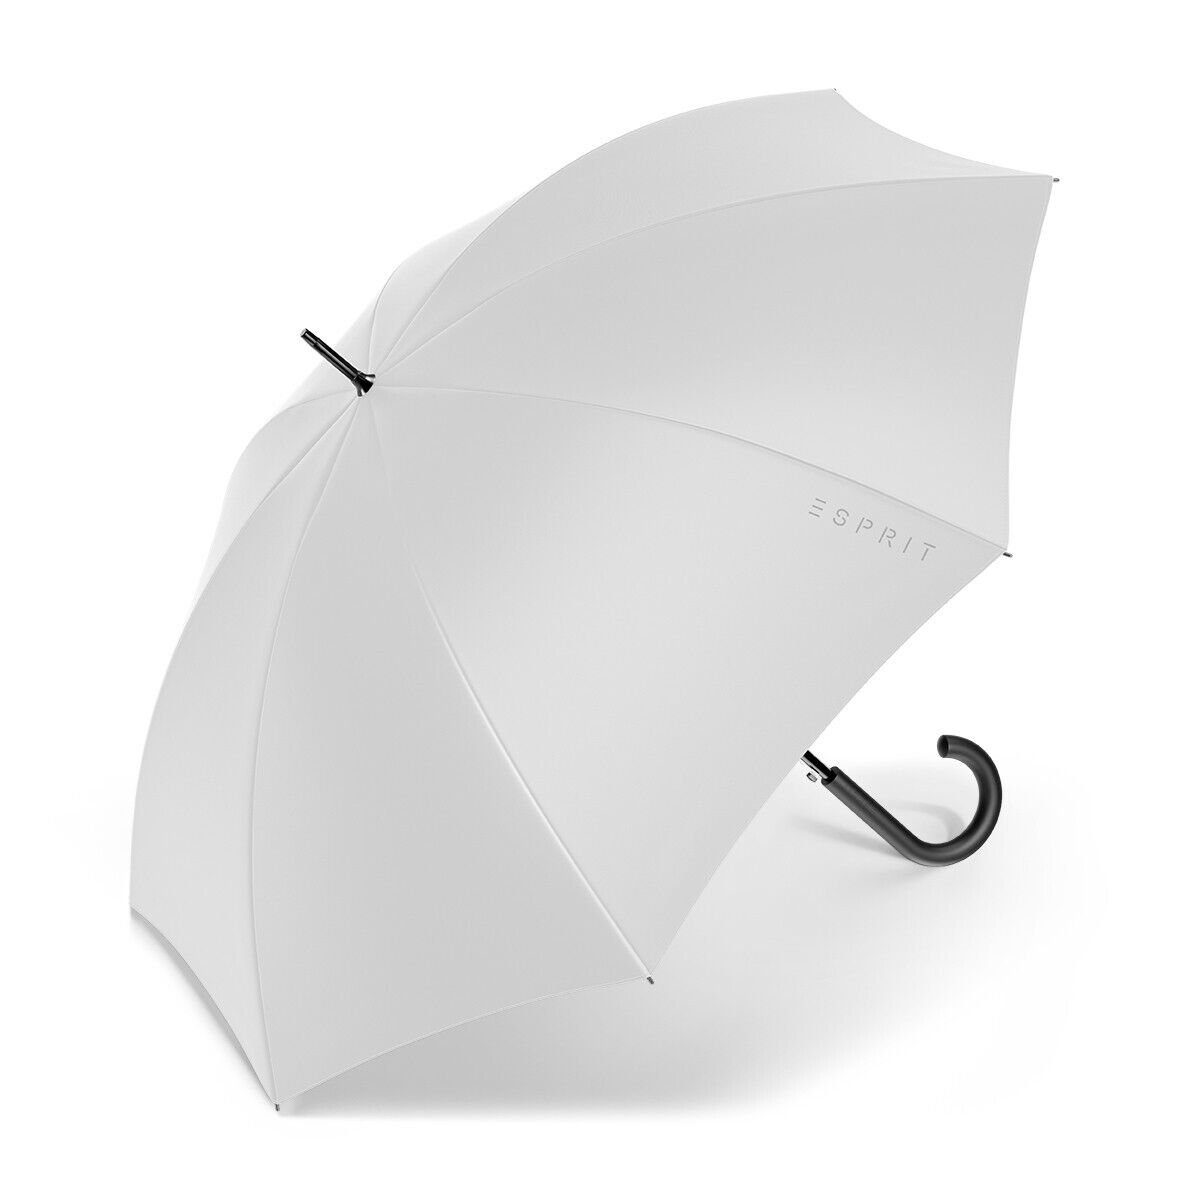 Stockregenschirm Automatik grau nachhaltiger mit antarctica Regenschirm Esprit